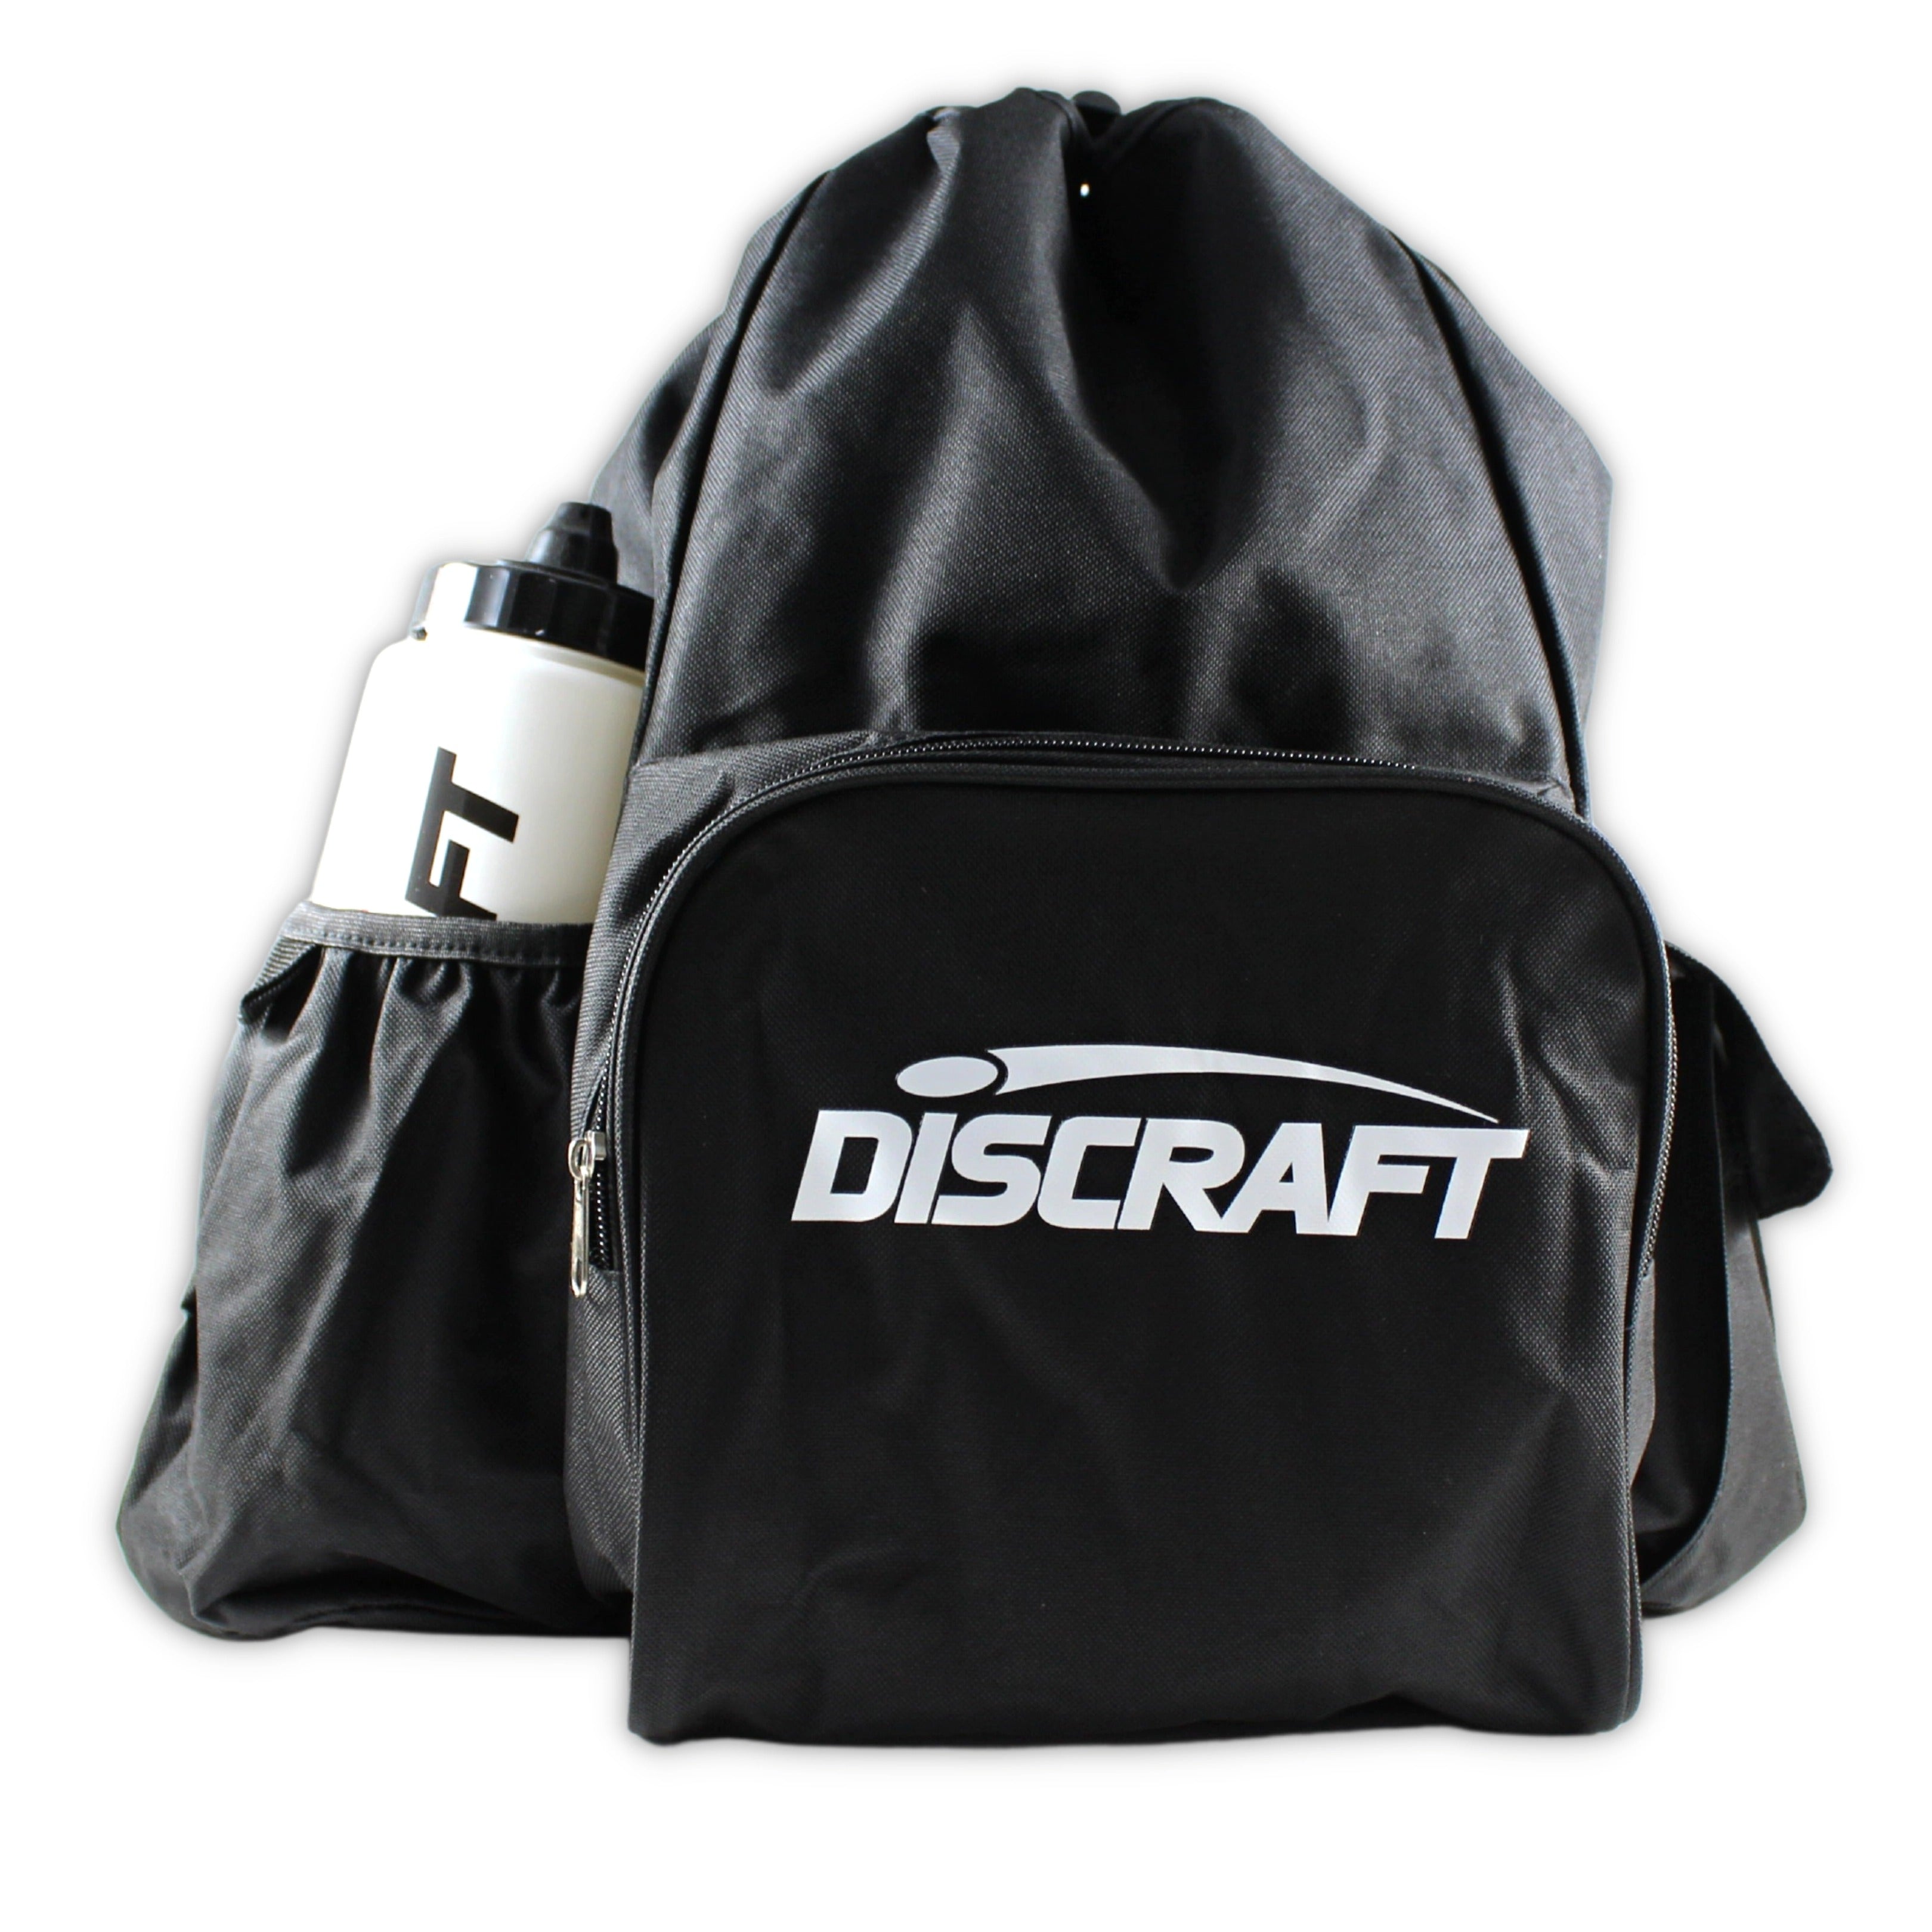 Discraft Drawstring Bag